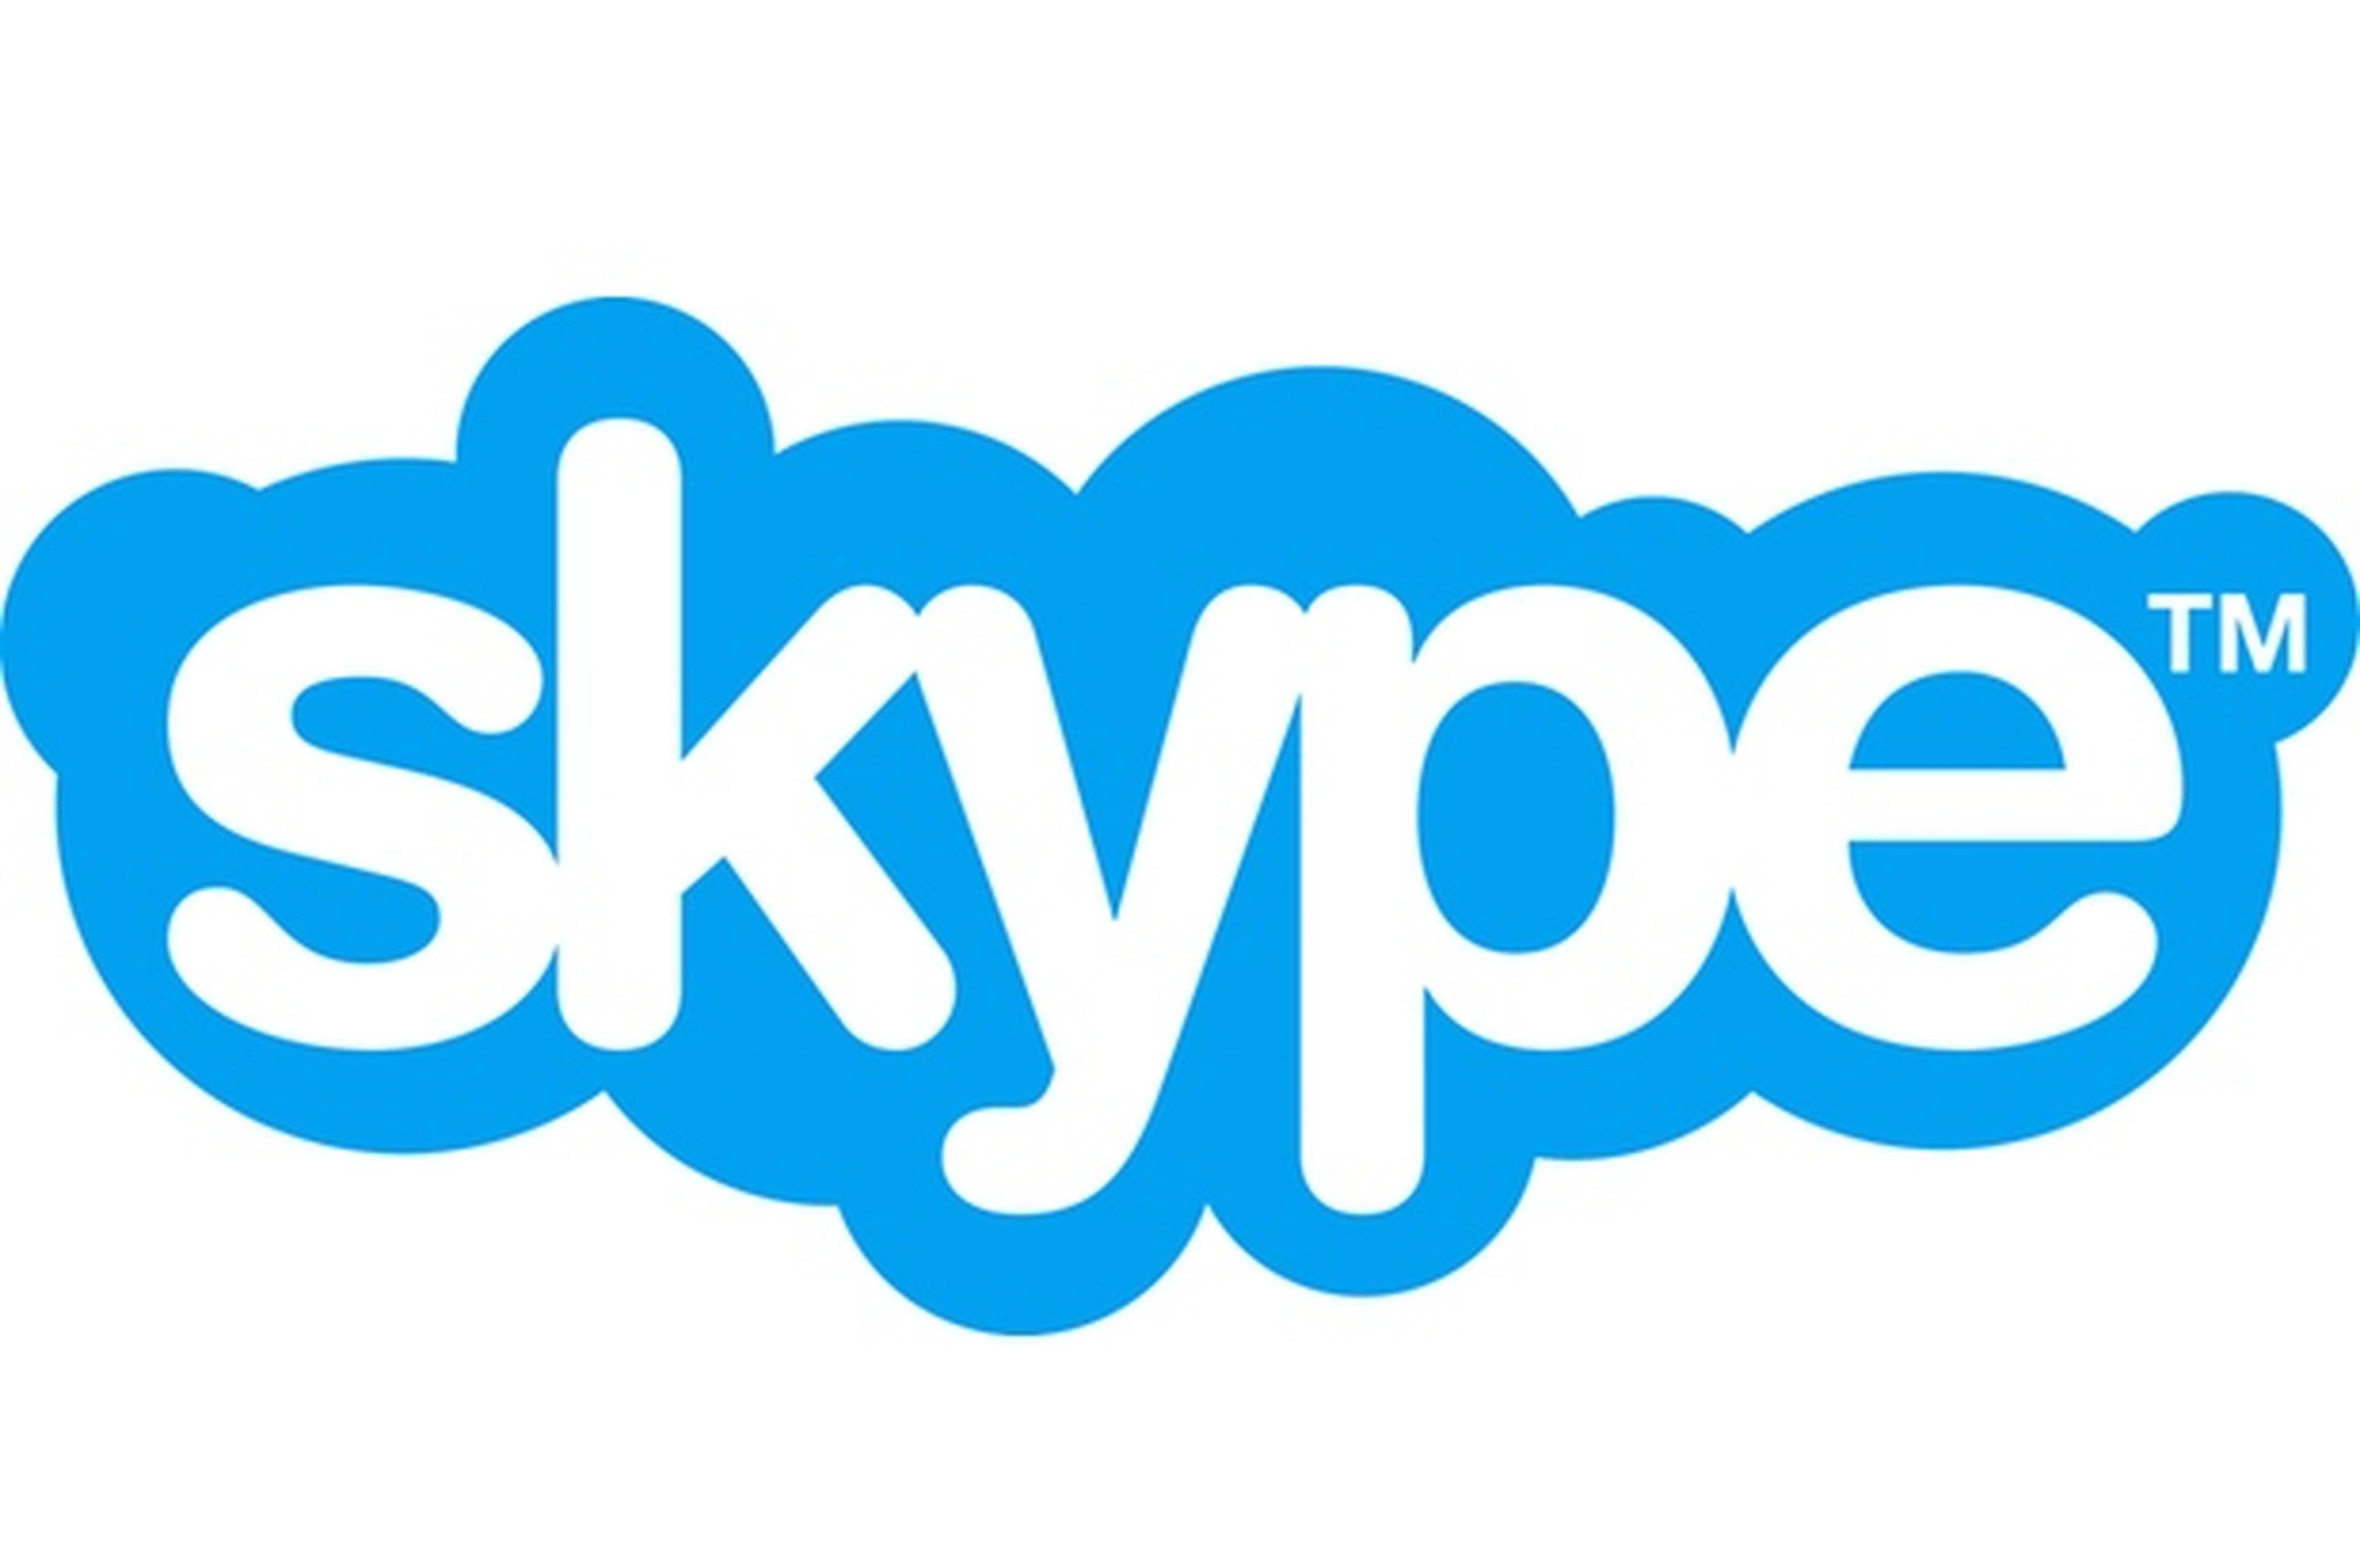 Registro e instalaciÃ³n en Skype